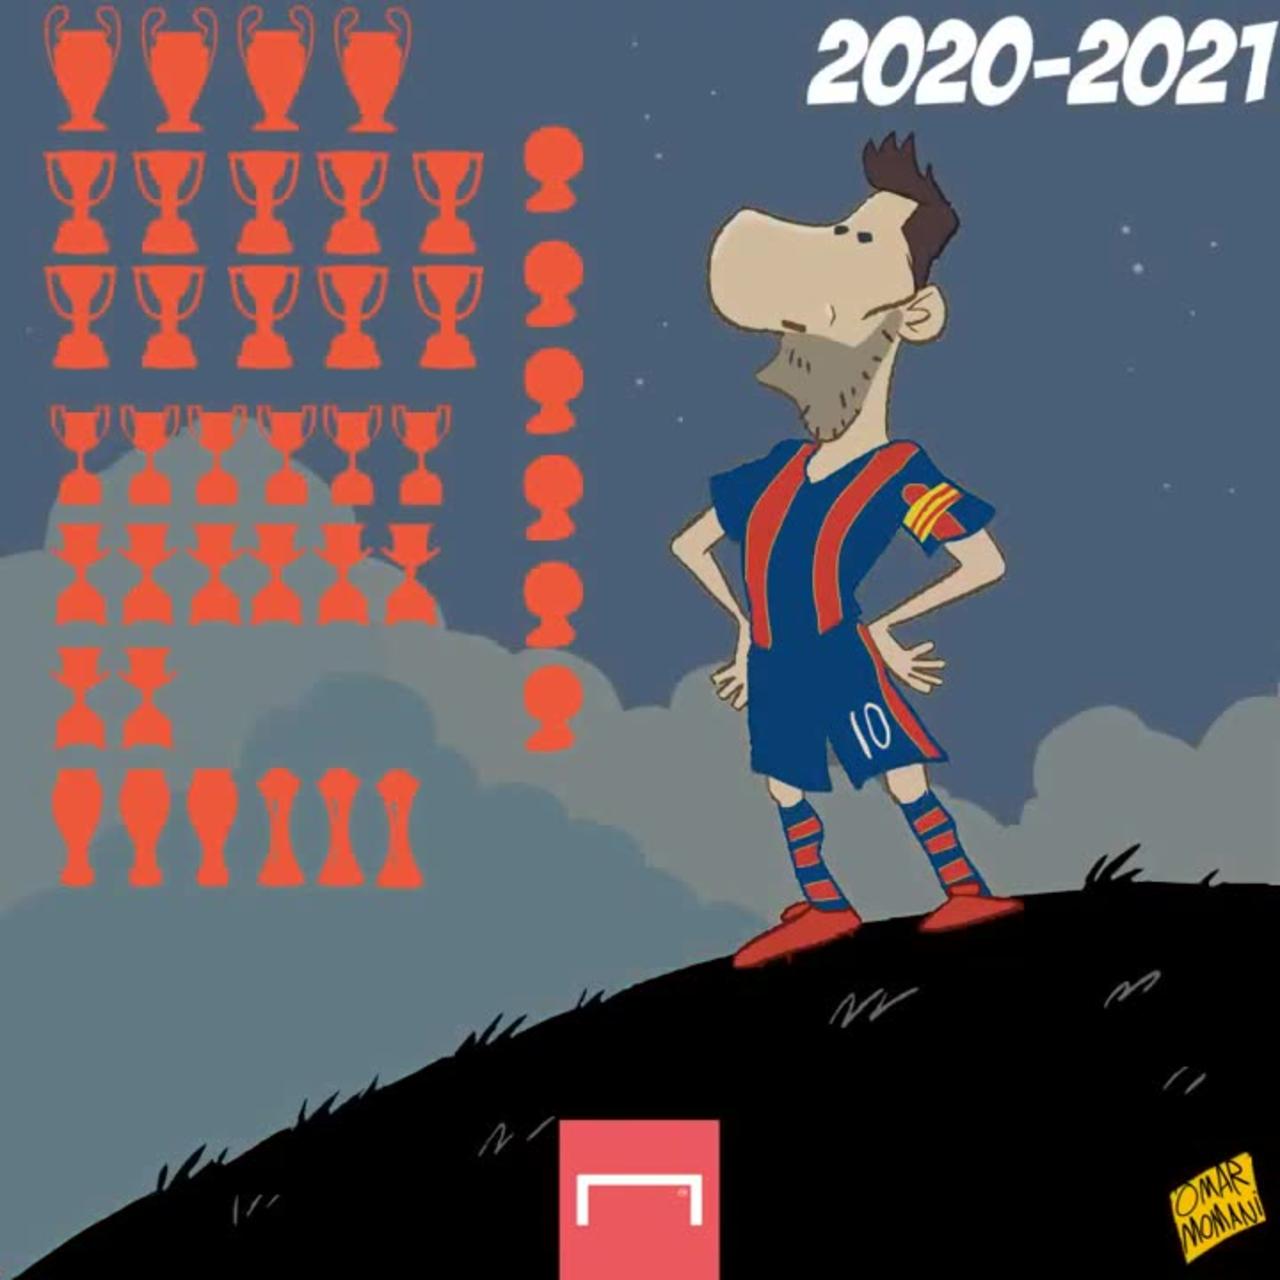 Messi's career in Barcelona